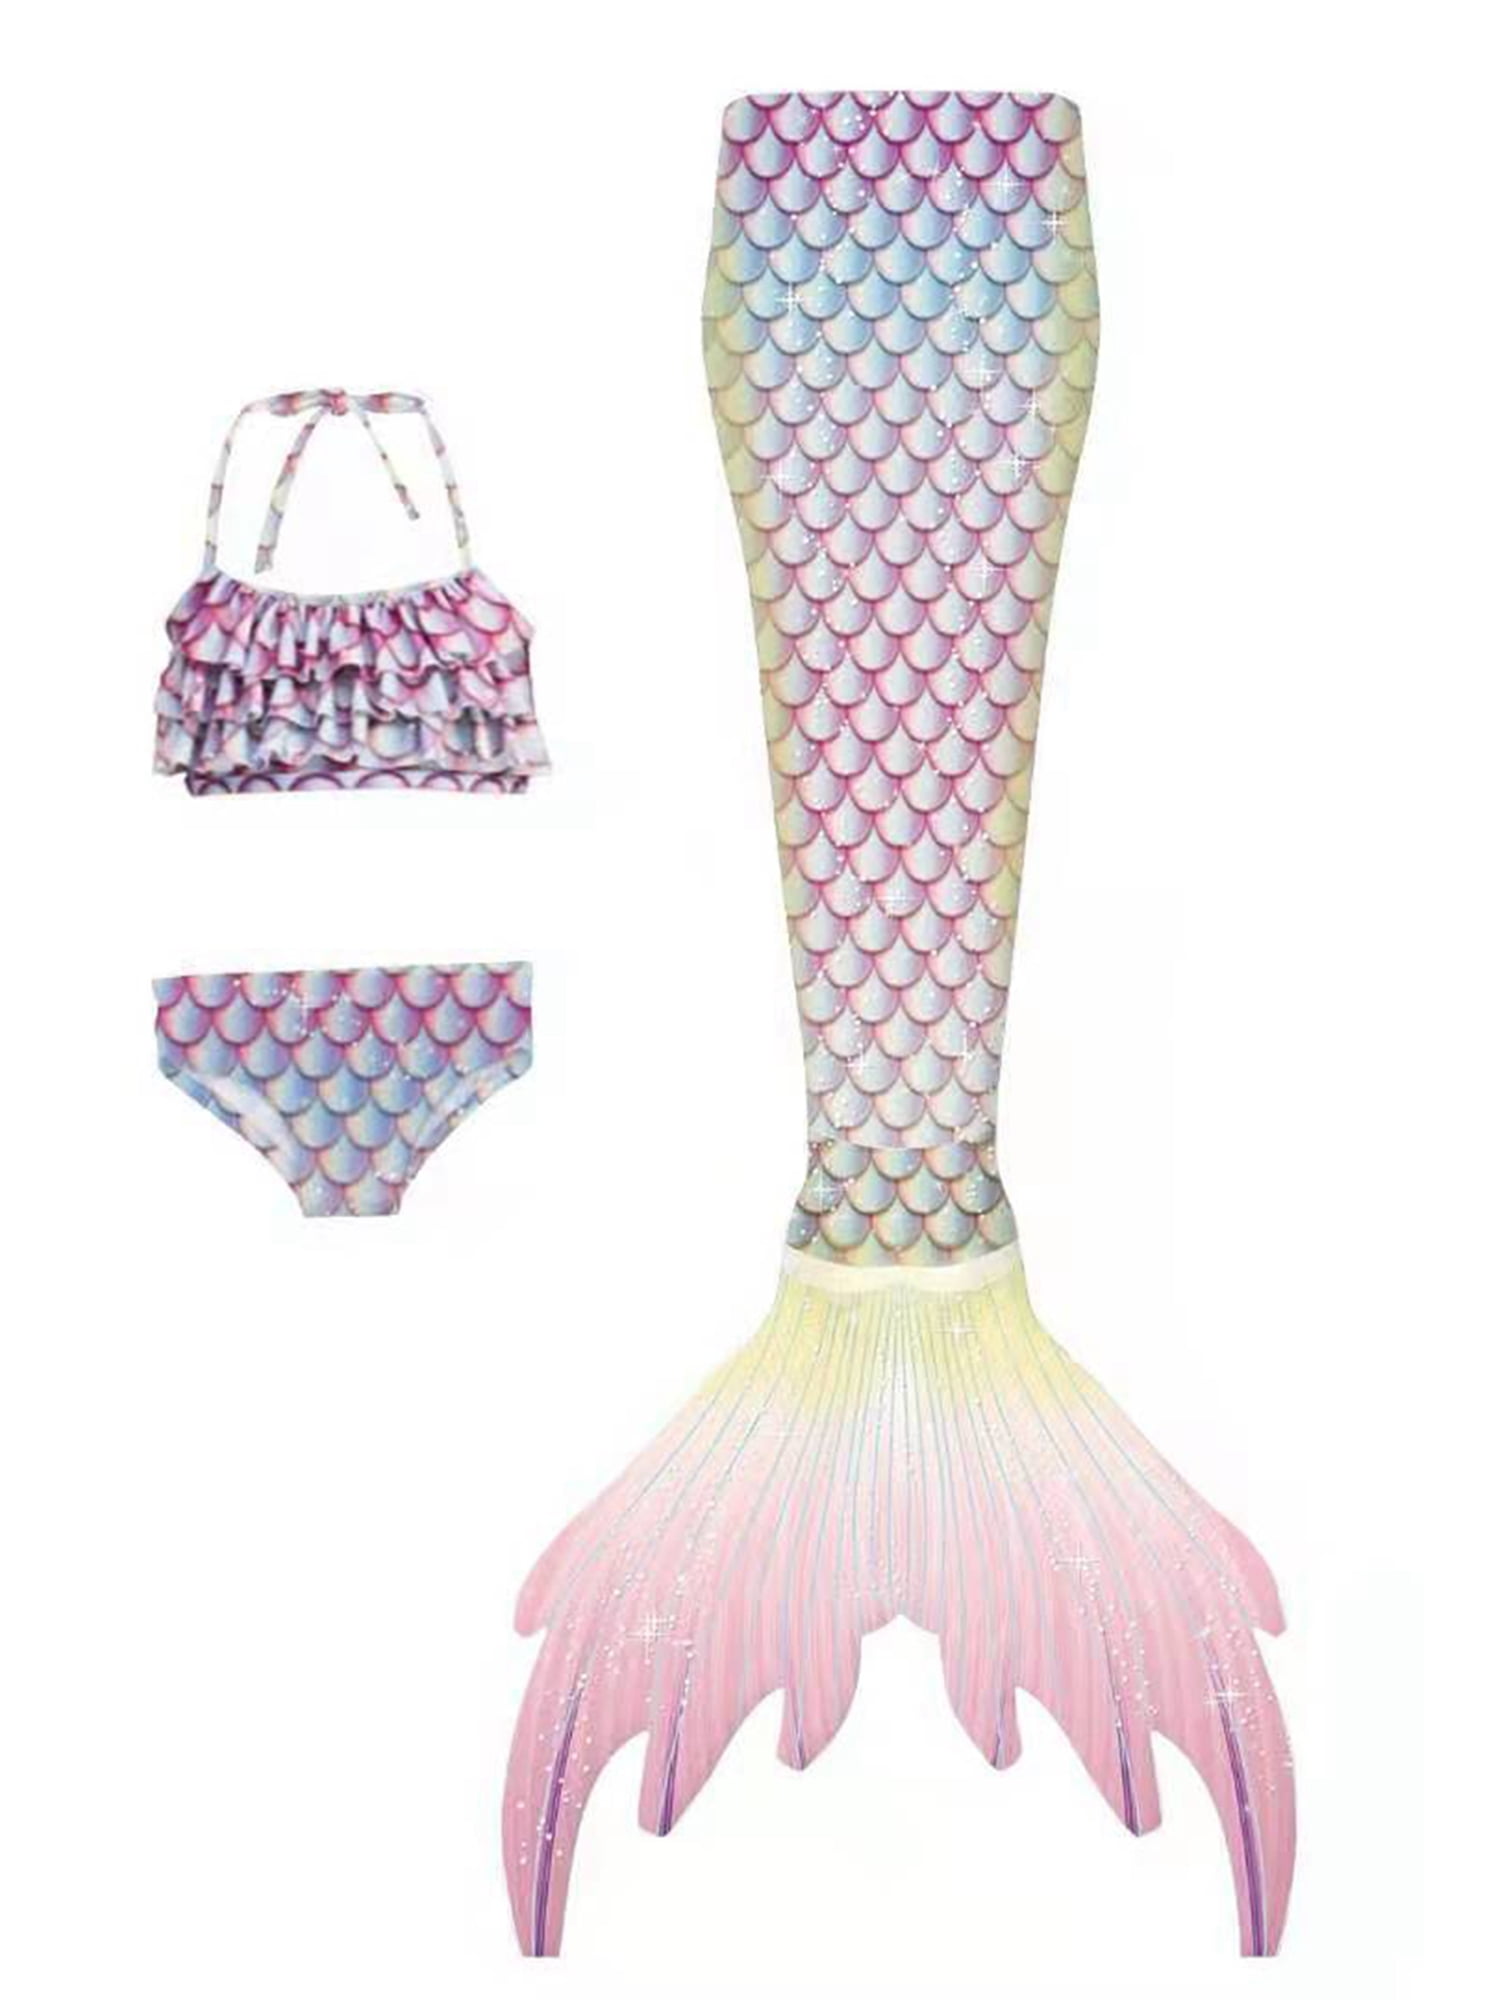 Bangyeer Girls Mermaid Swimsuit, Princess Girl Bikini Set 3 Pieces ...